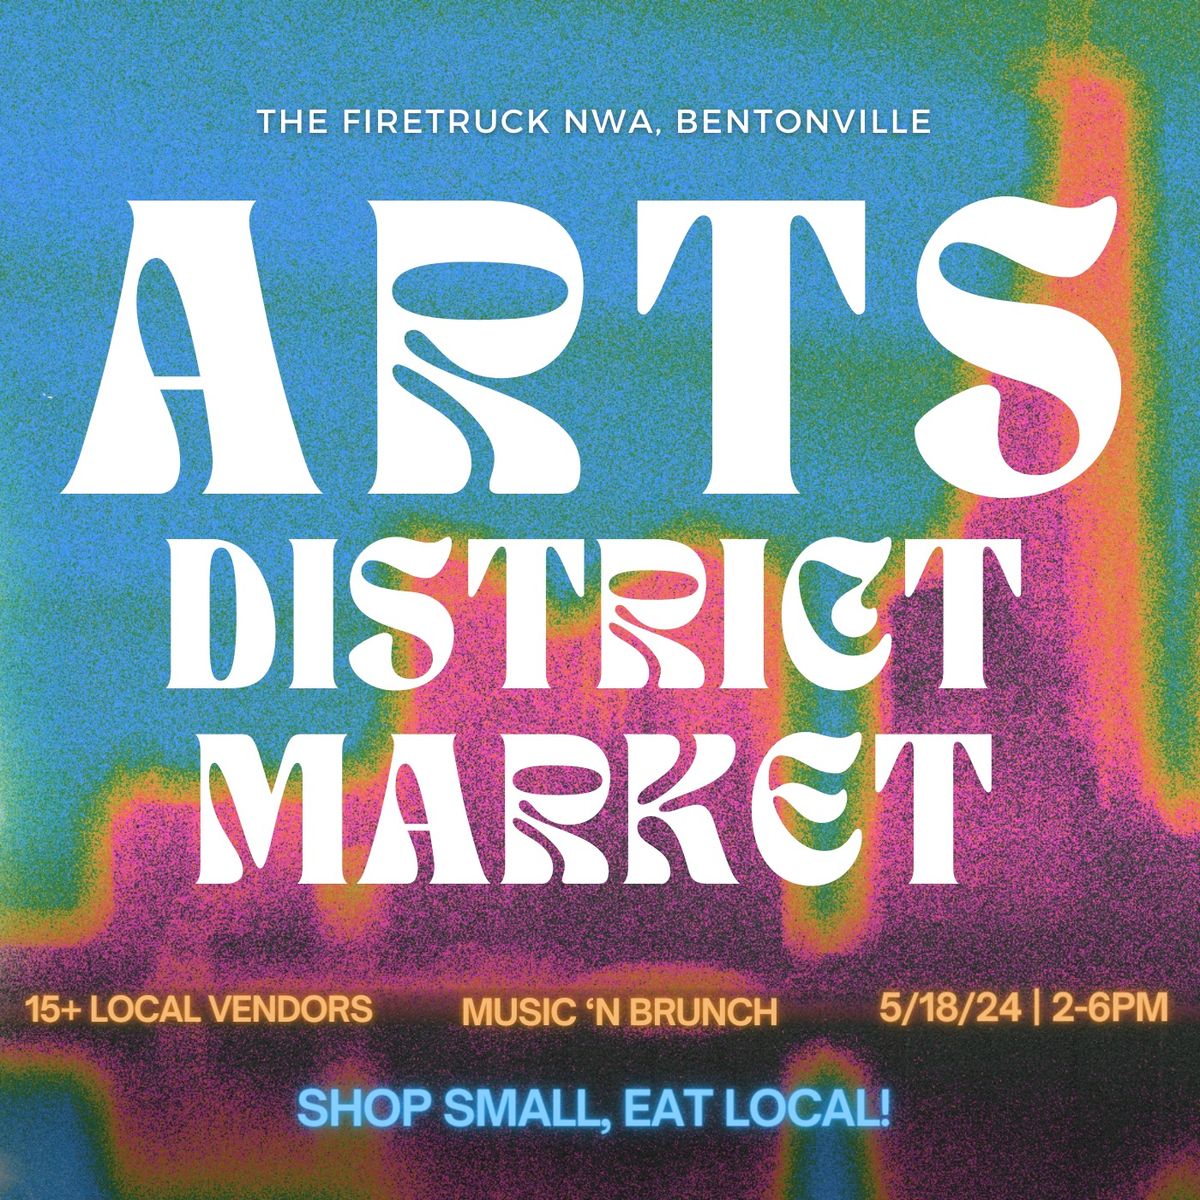 Arts District Market